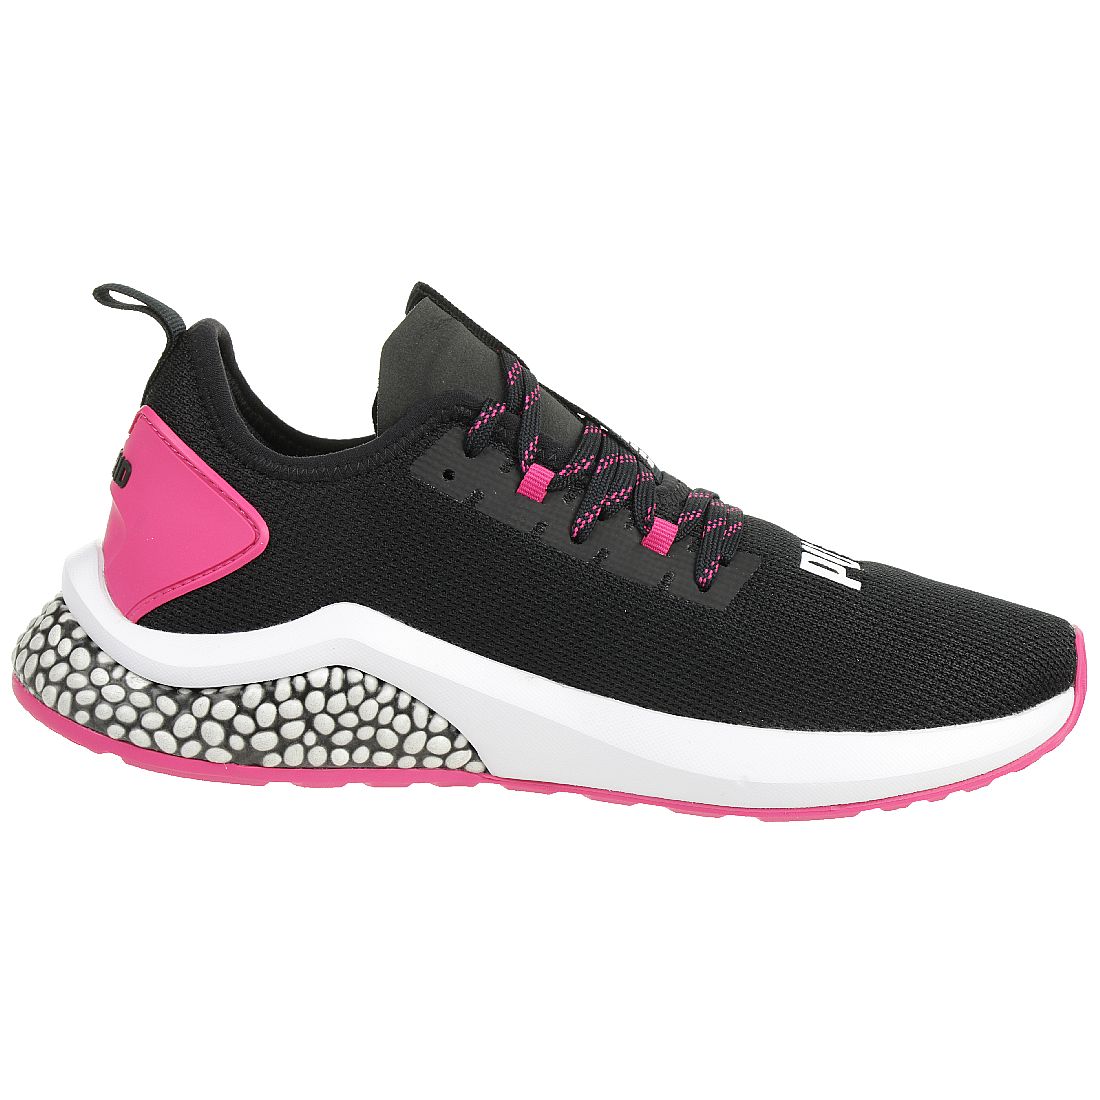 Puma Hybrid NX Wn Damen Sneaker Laufschuh Fitness schwarz pink 192268 04